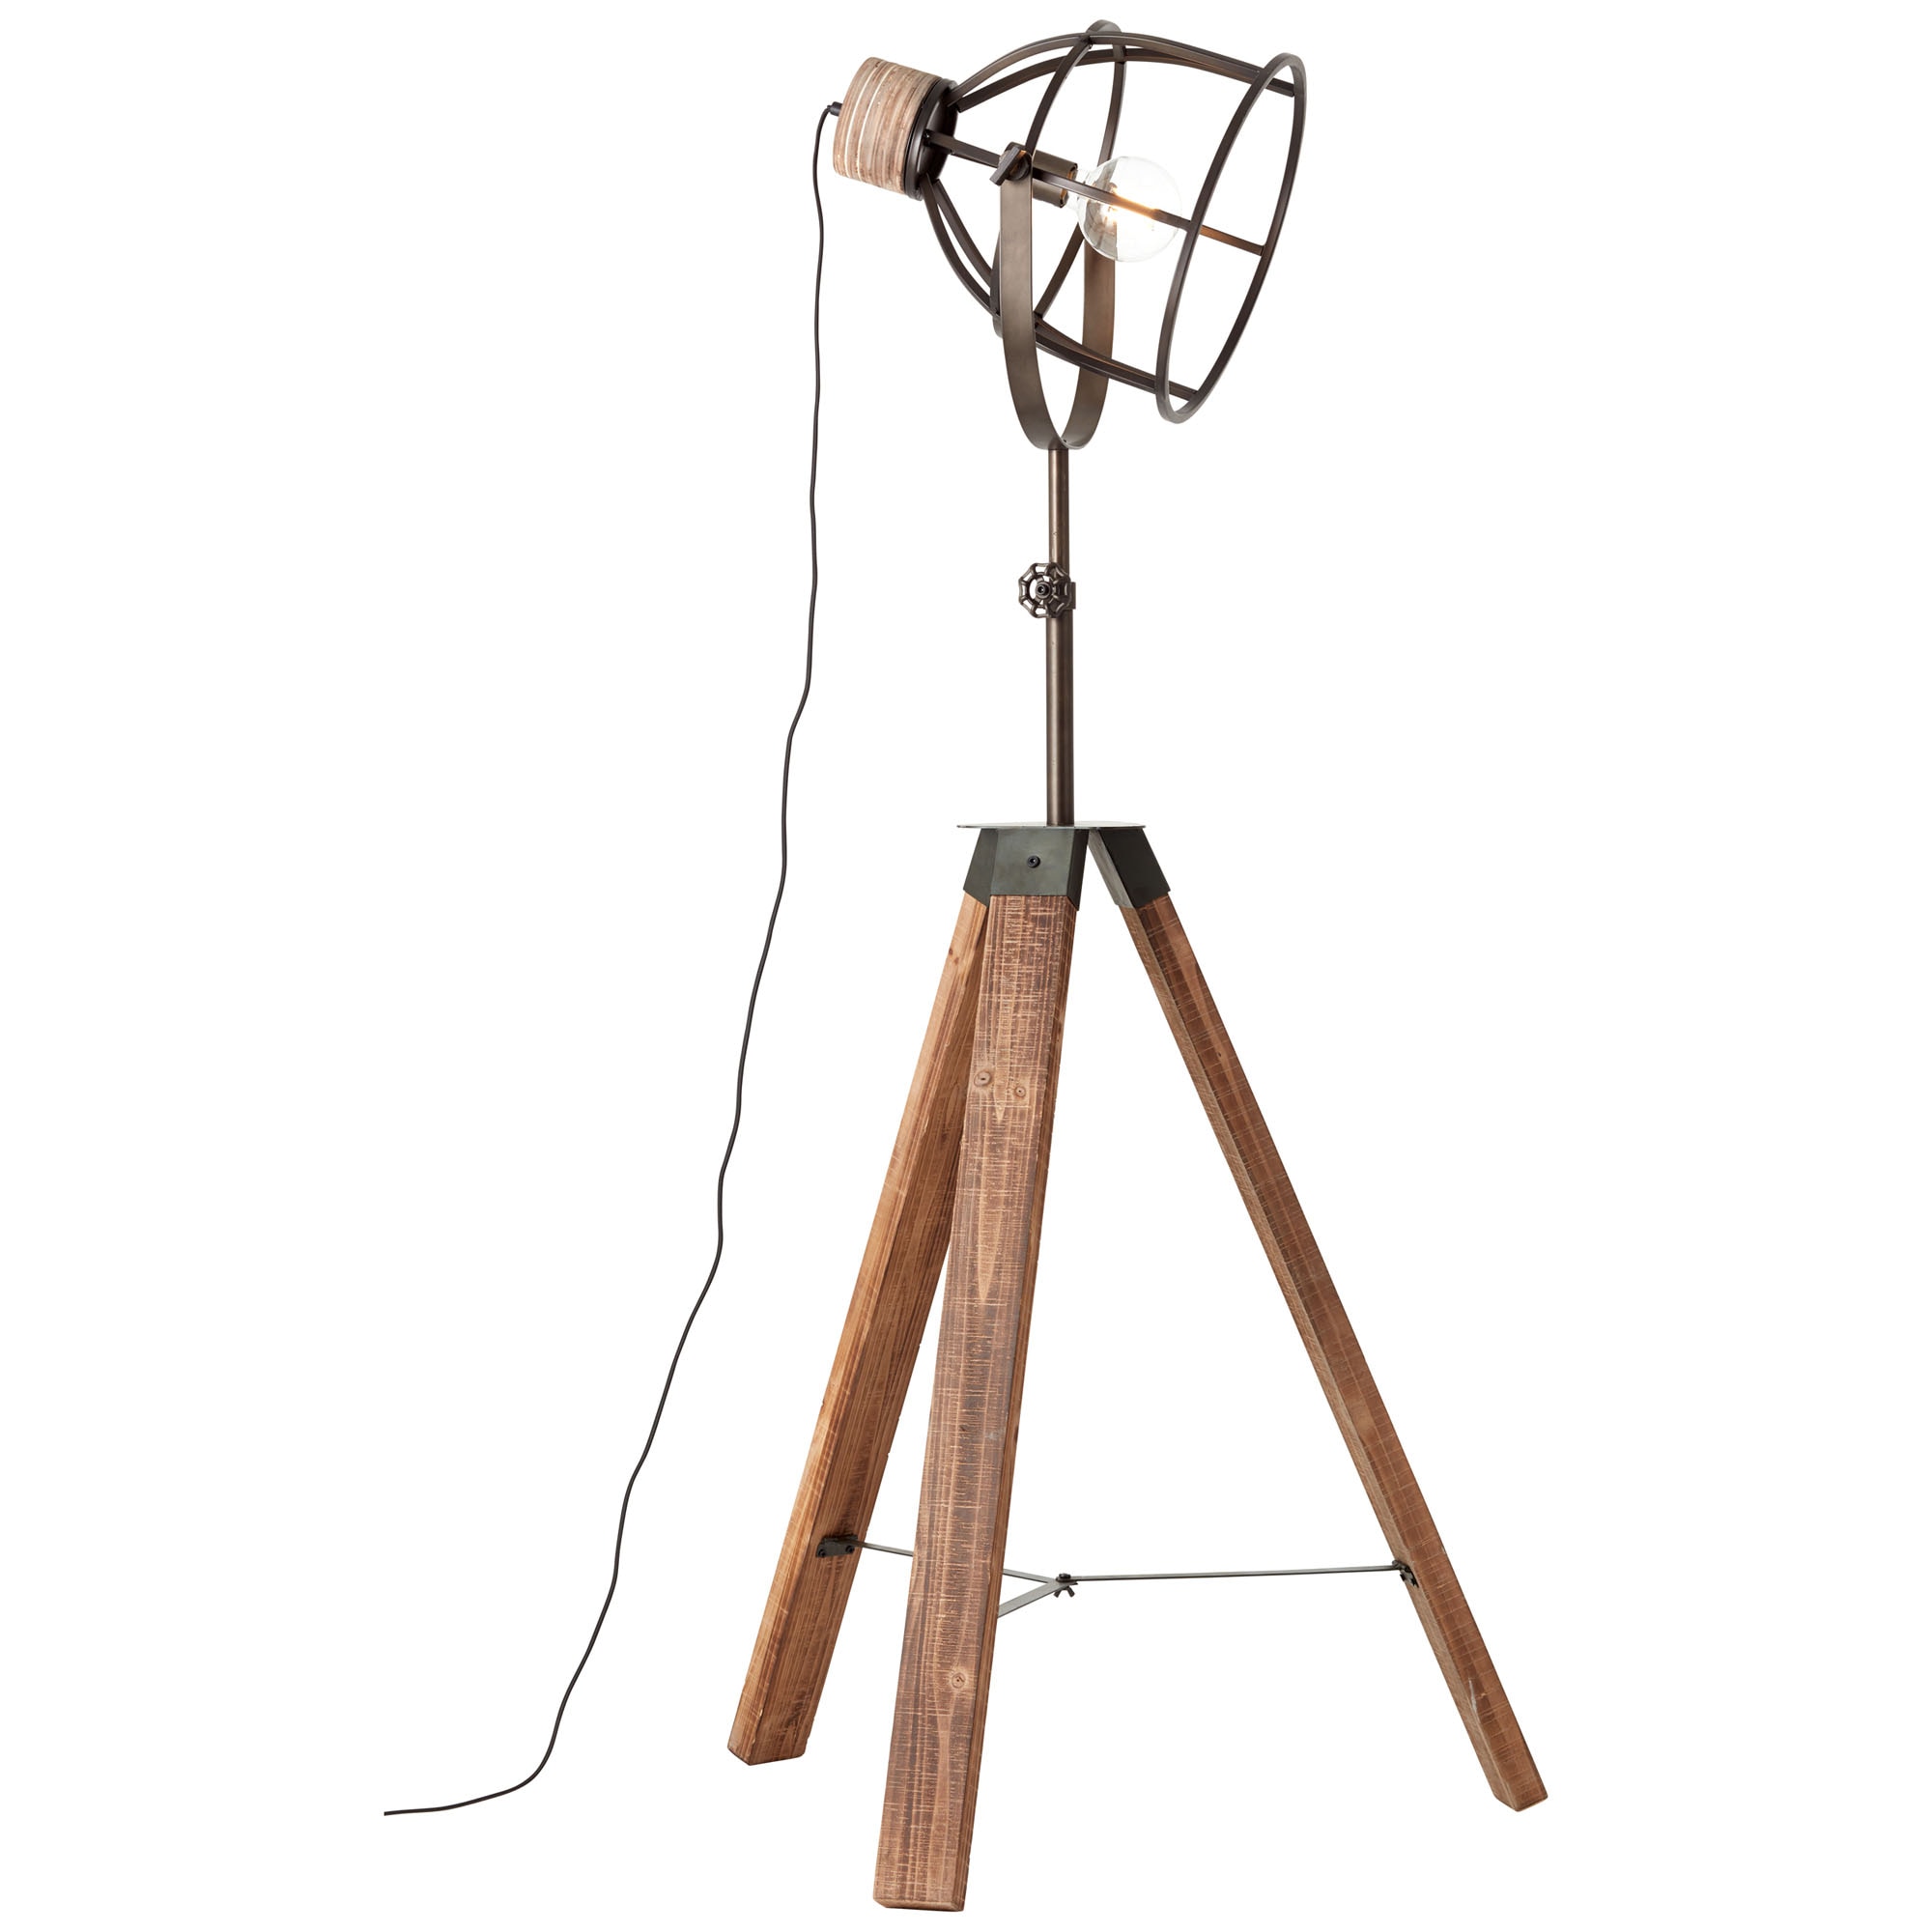 Brilliant Stehlampe »Matrix Wood«, 1 flammig-flammig, 163 cm Höhe, Ø 72 cm, E27, schwenkbar, Metall/Holz, schwarz stahl